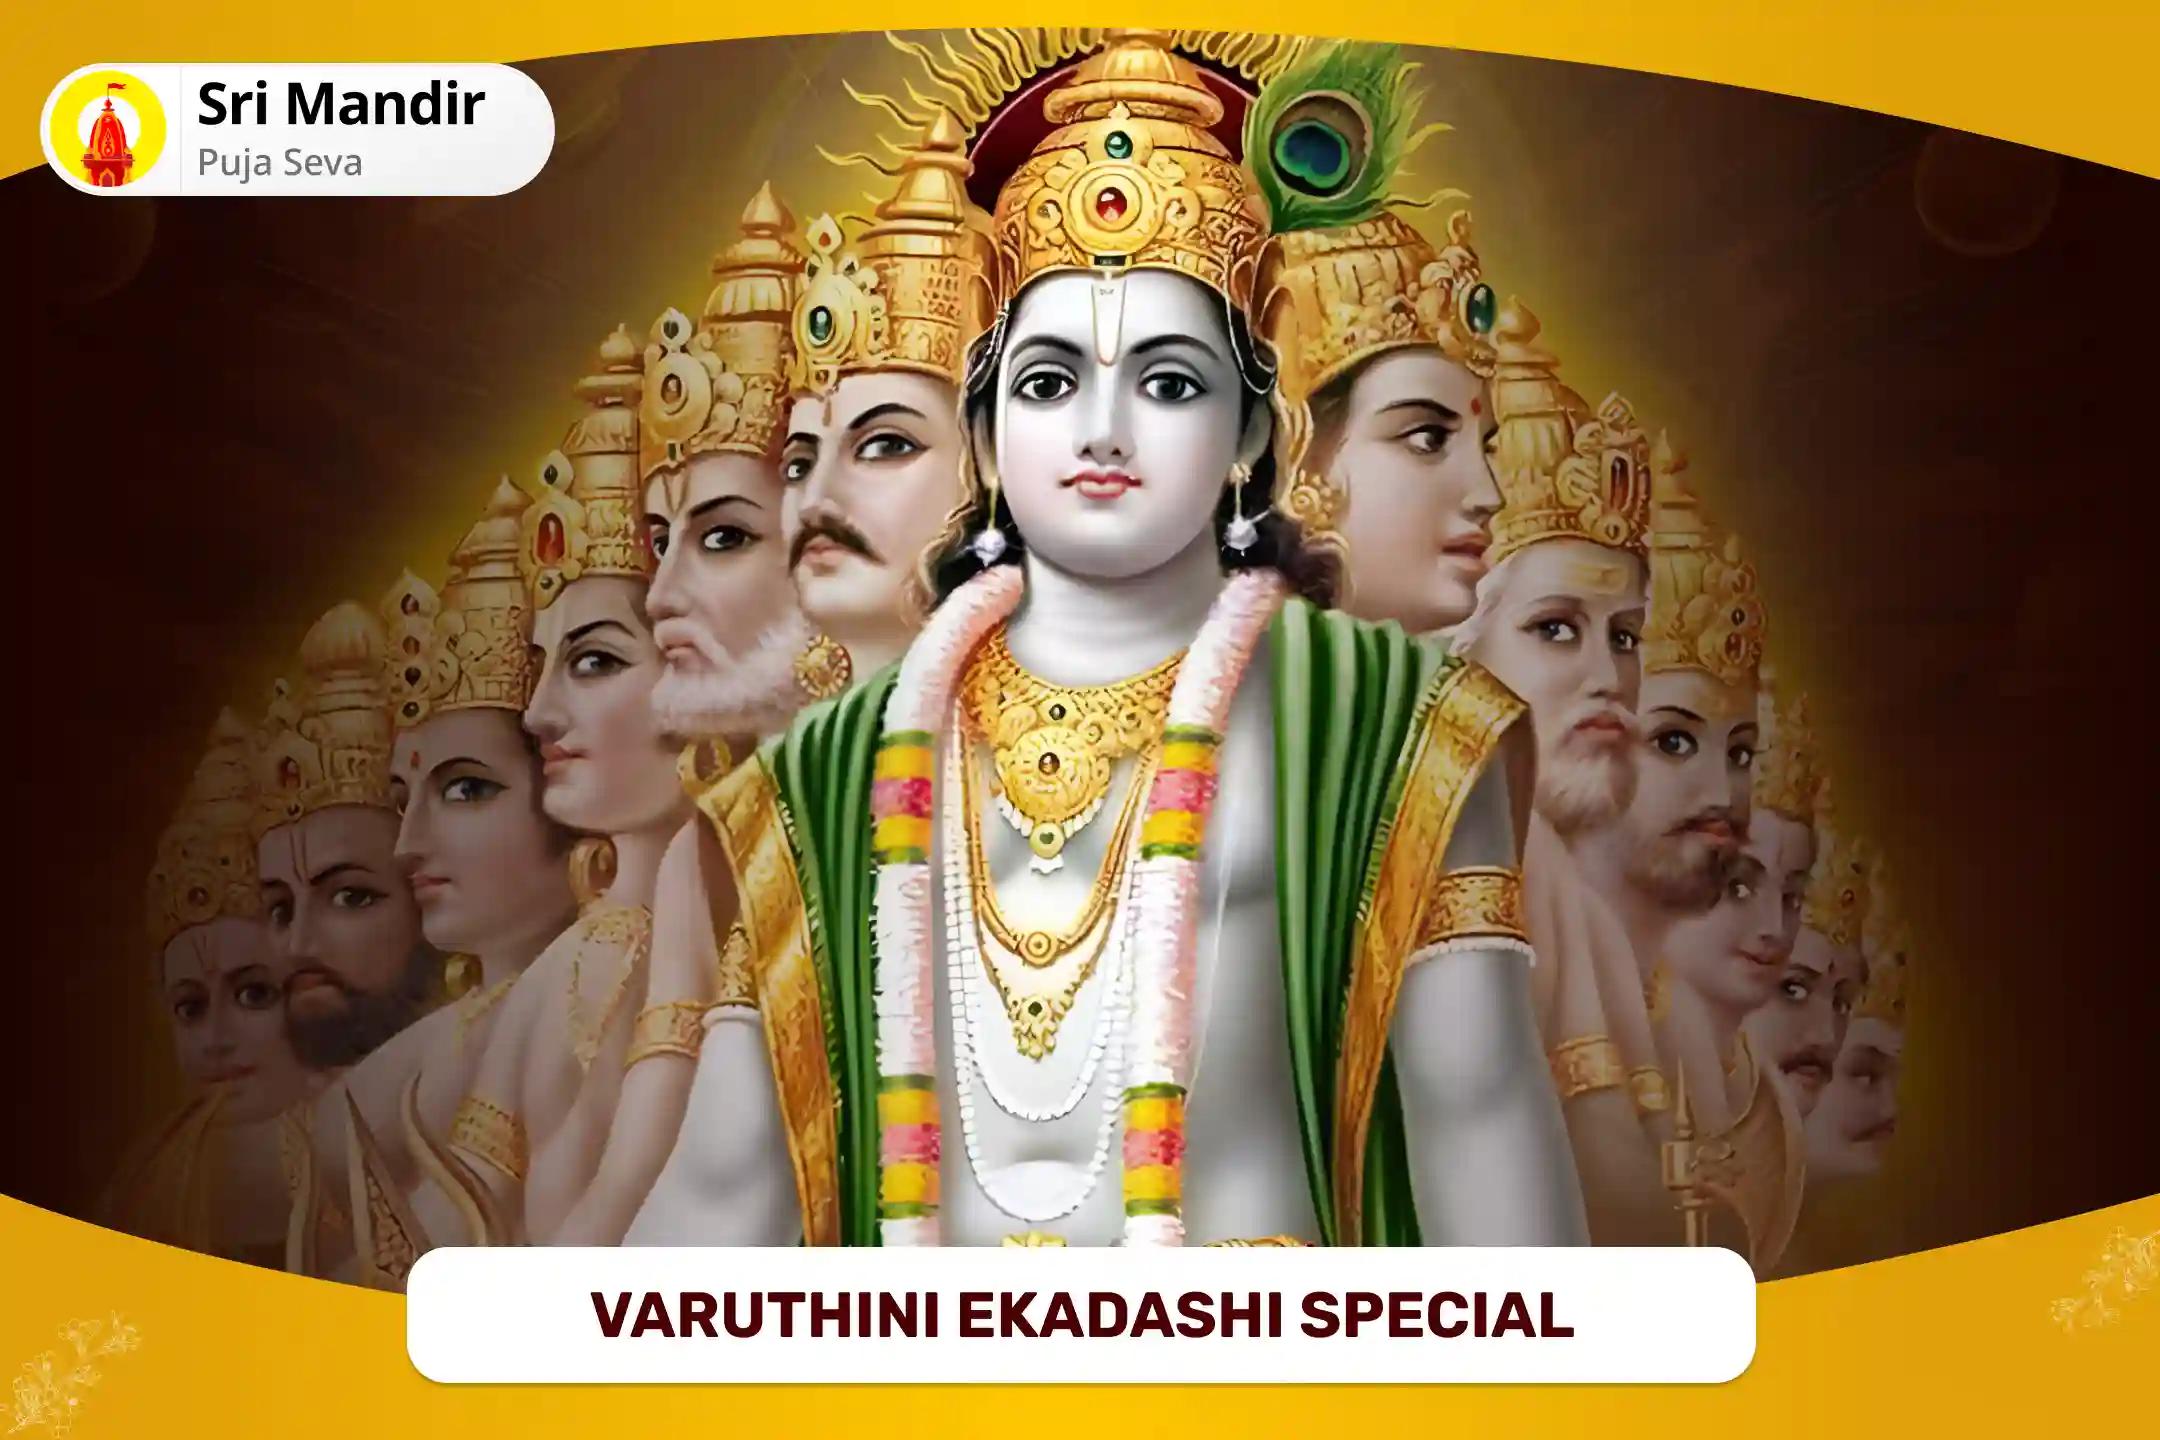 Varuthini Ekadashi Special Ekadashi Vrat Katha, Vishnu Sahastranama Path and Anna Daan for Protection, Prosperity and Spiritual Well-Being